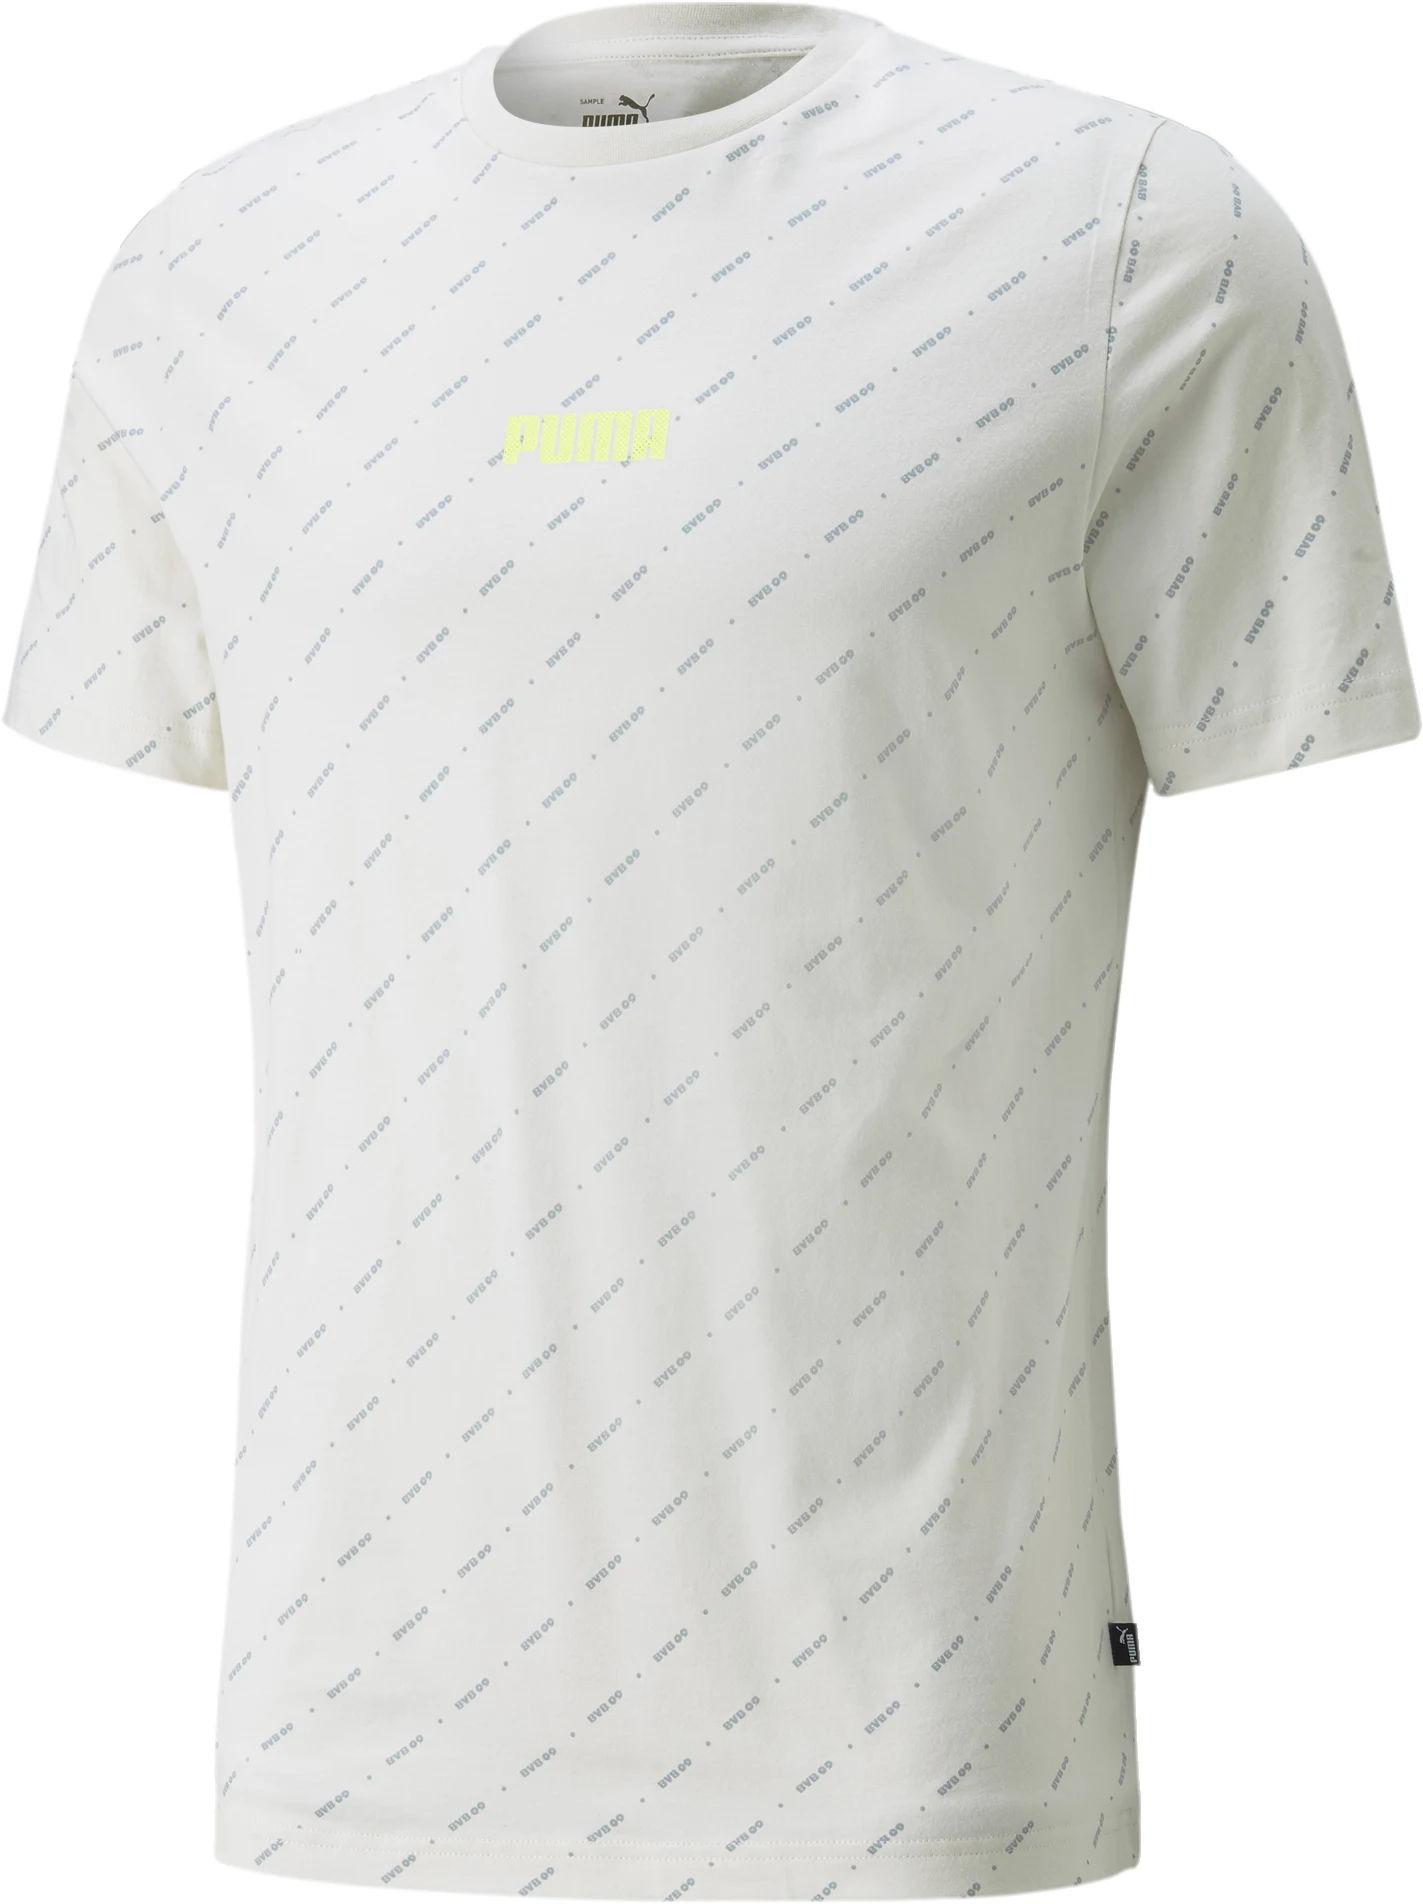 Puma BVB Dortmund FtblLegacy T-Shirt